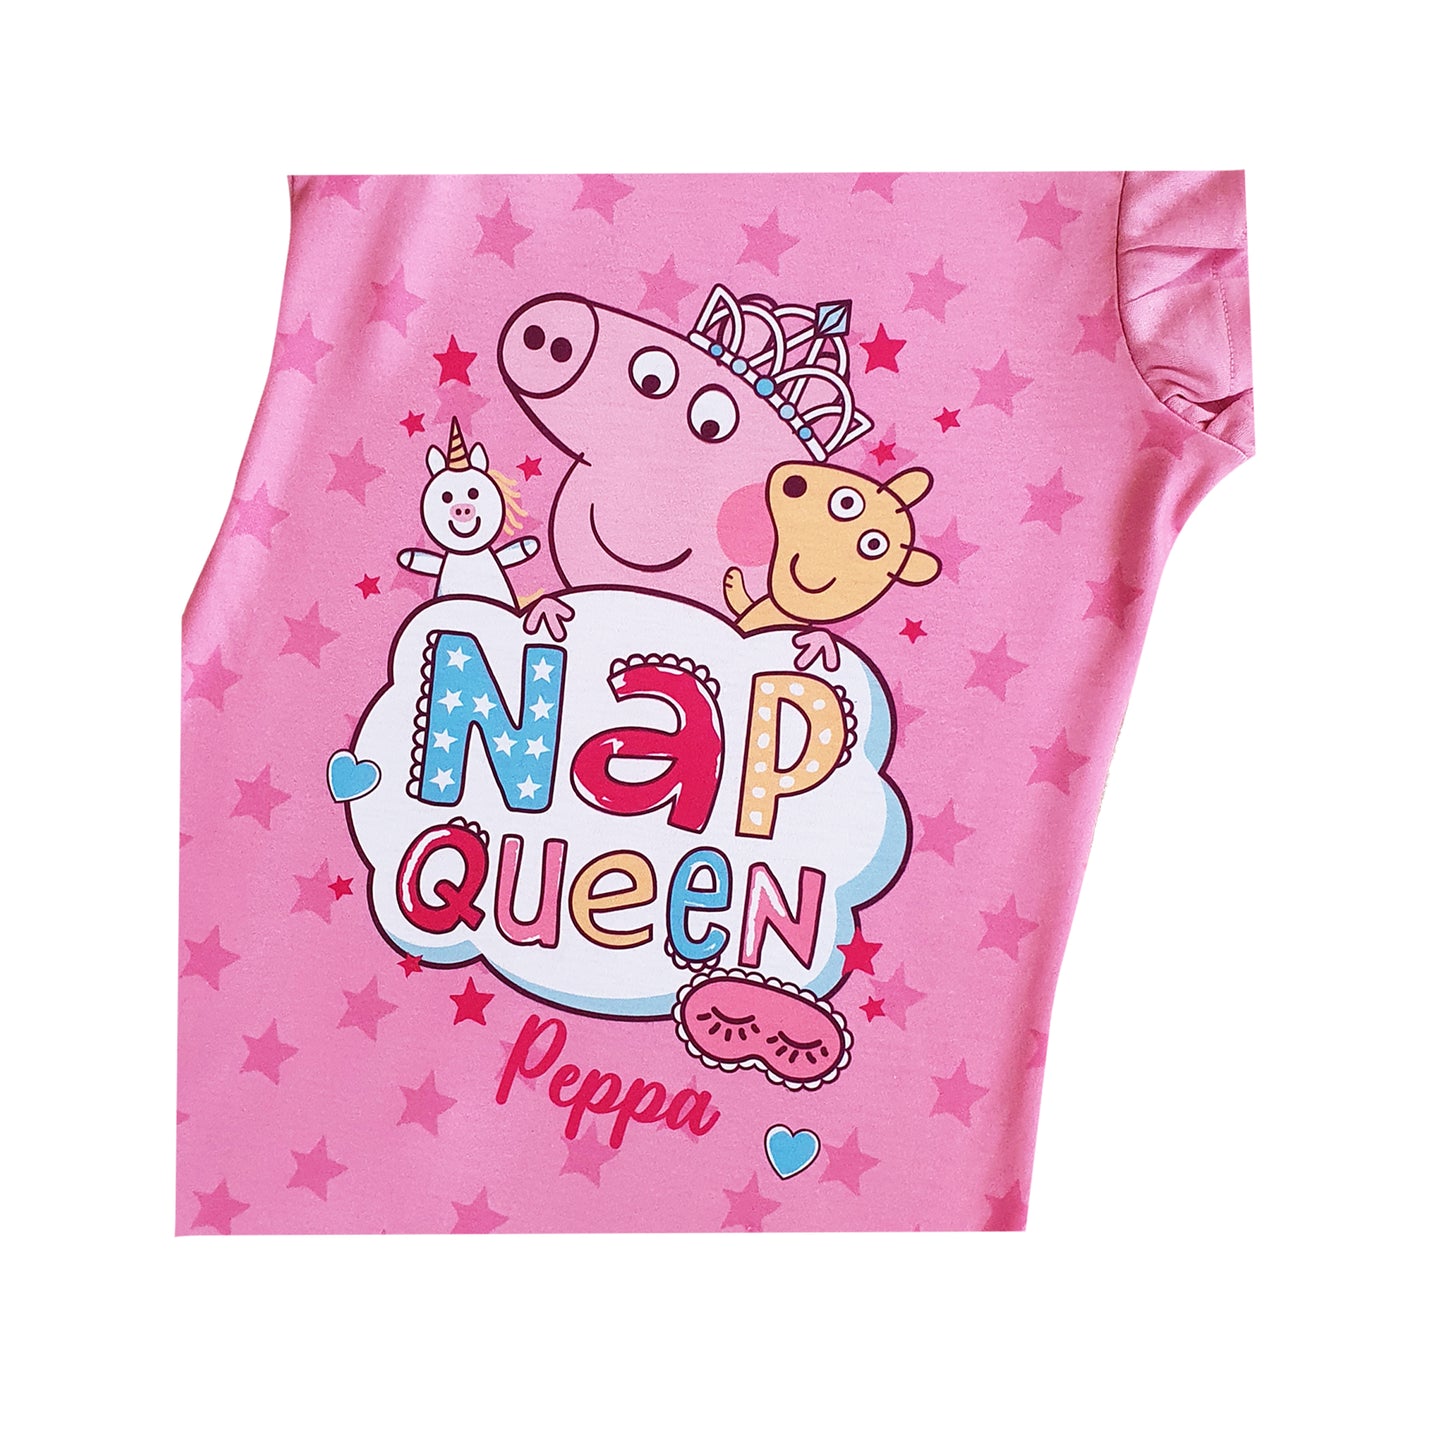 Girls Peppa Pig Nightdress Nap Queen